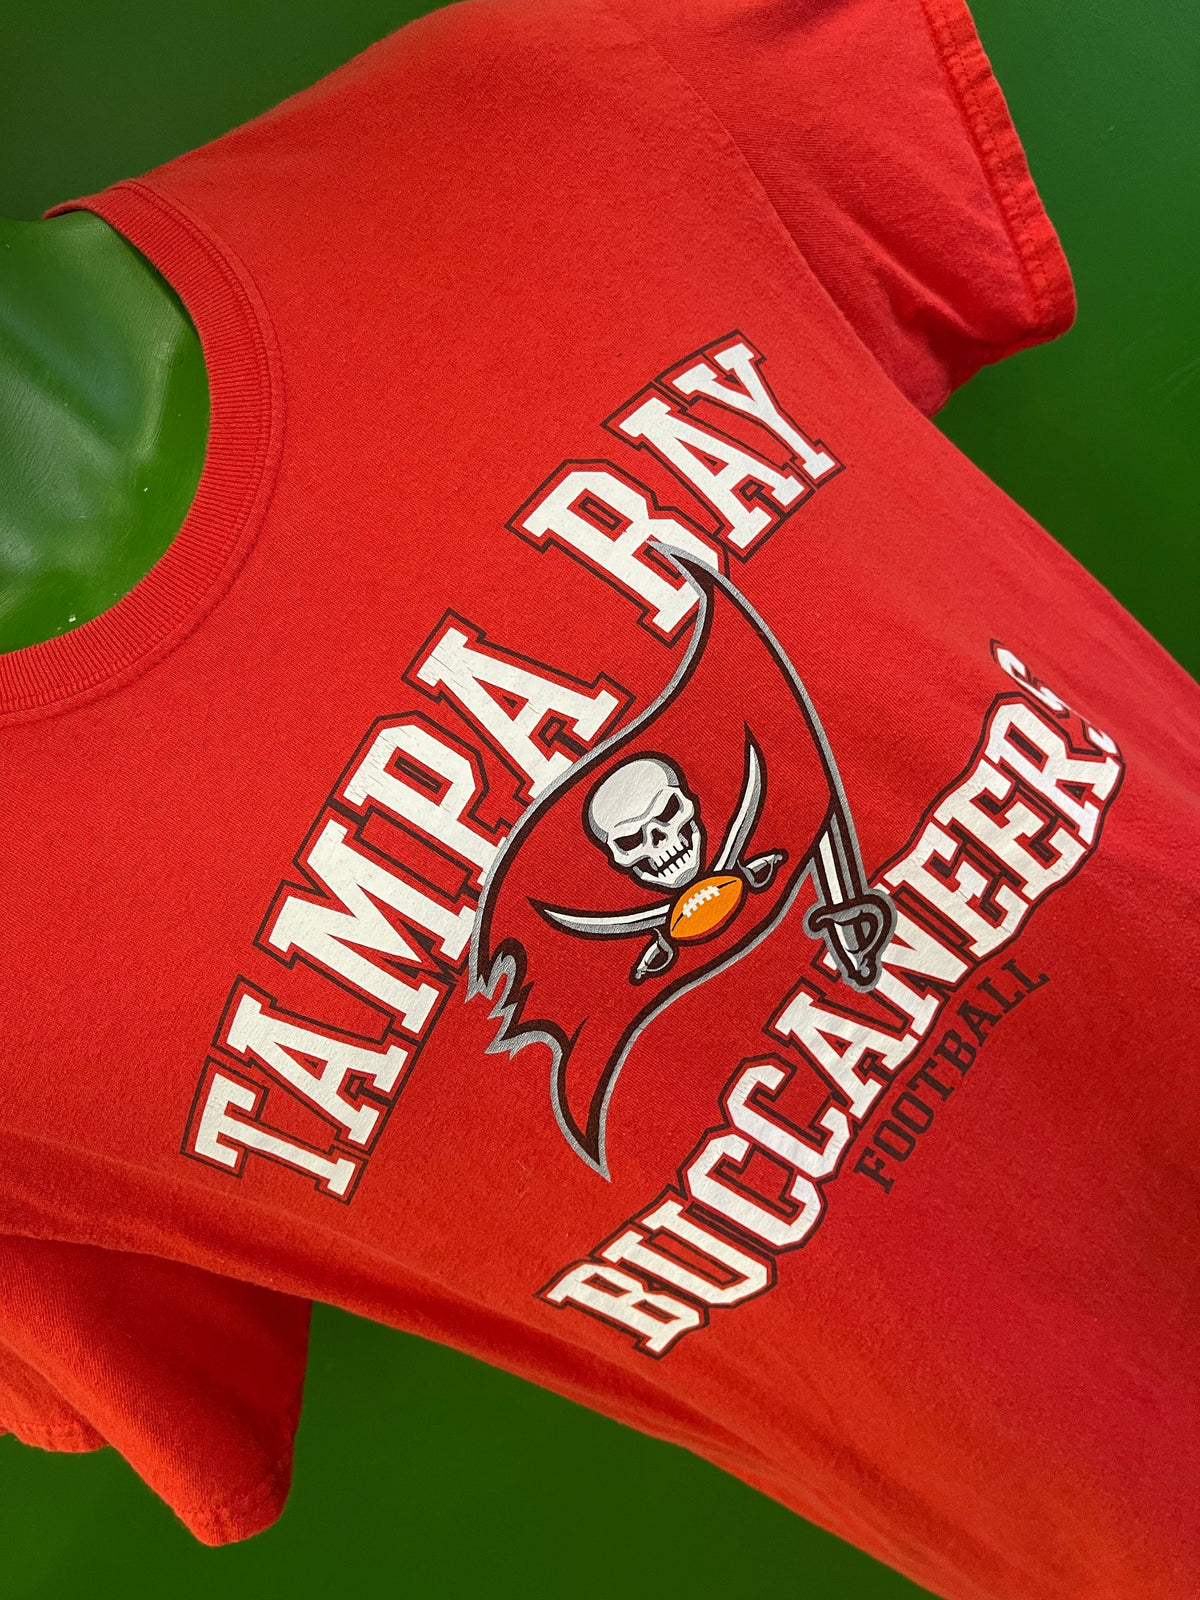 NFL Tampa Bay Buccaneers Majestic 100% Cotton T-Shirt Men's Medium